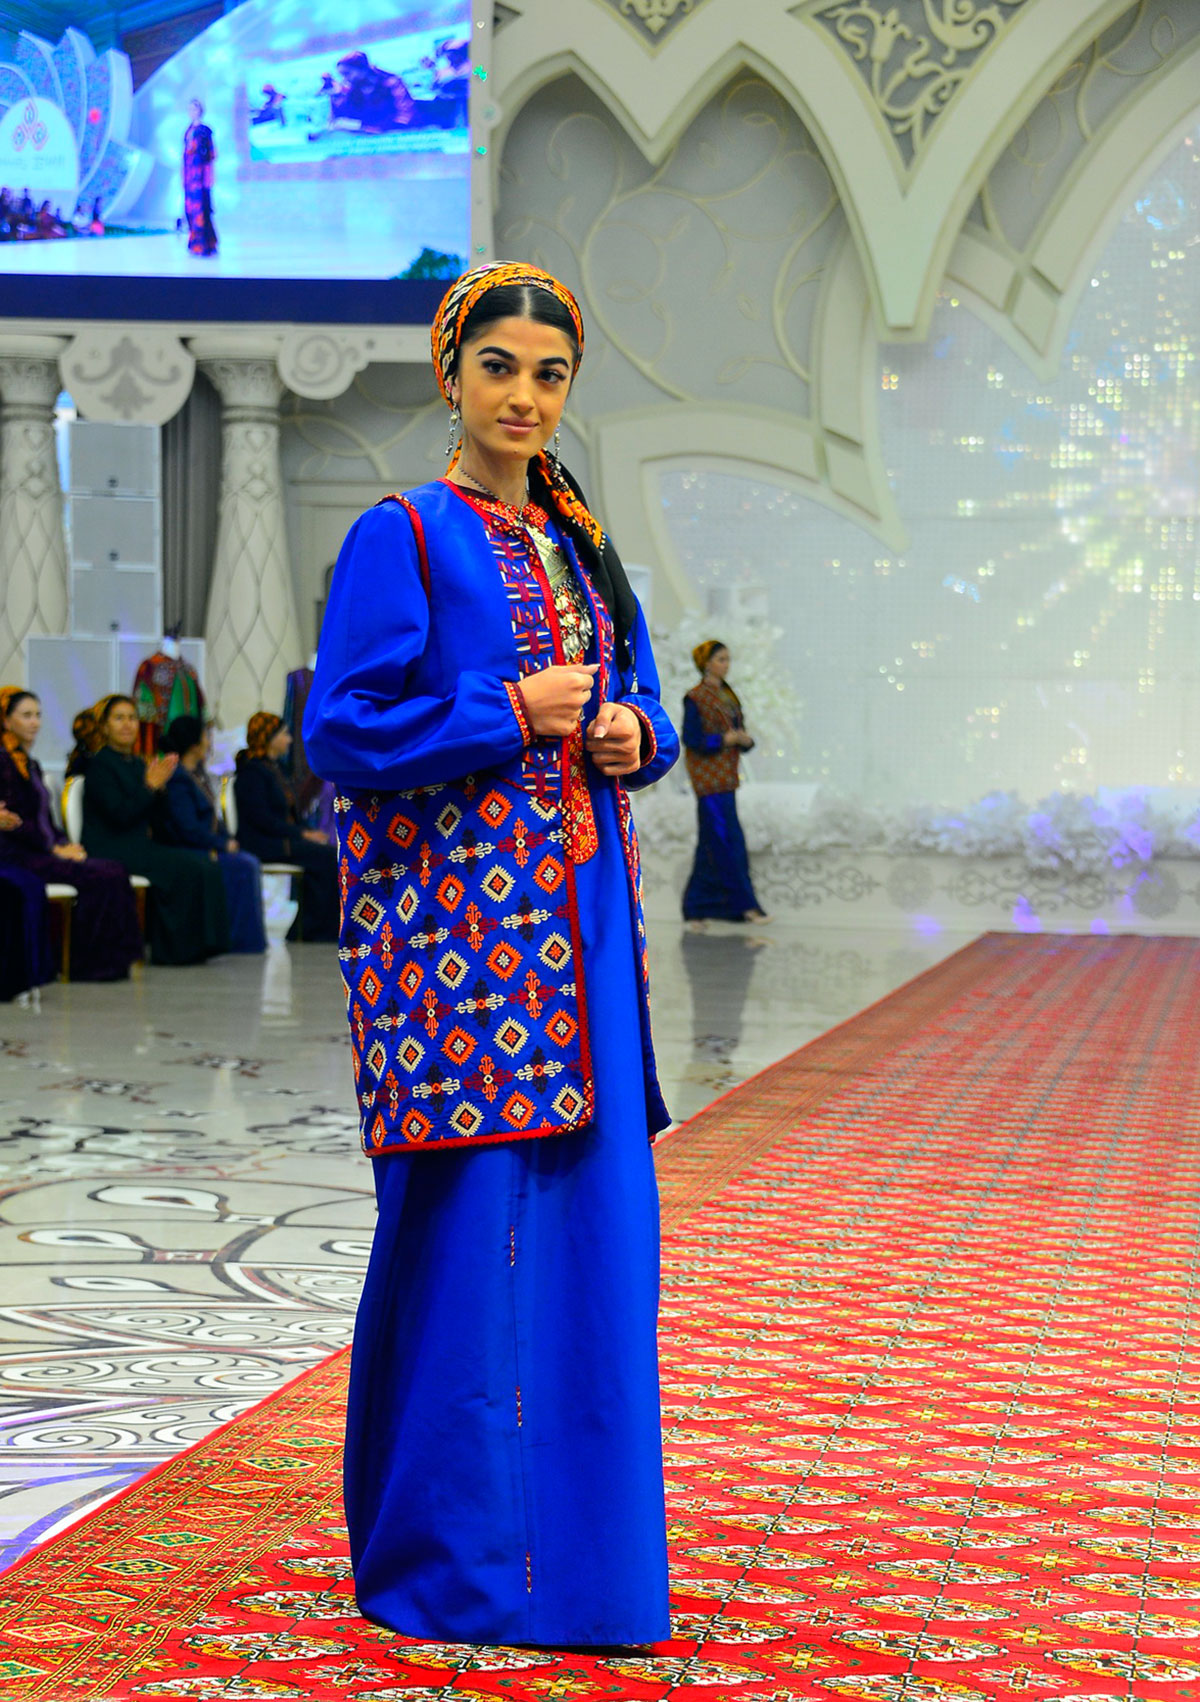 Türkmenistanyň paýtagtynda «Moda hepdeligi -2022» geçirilýär